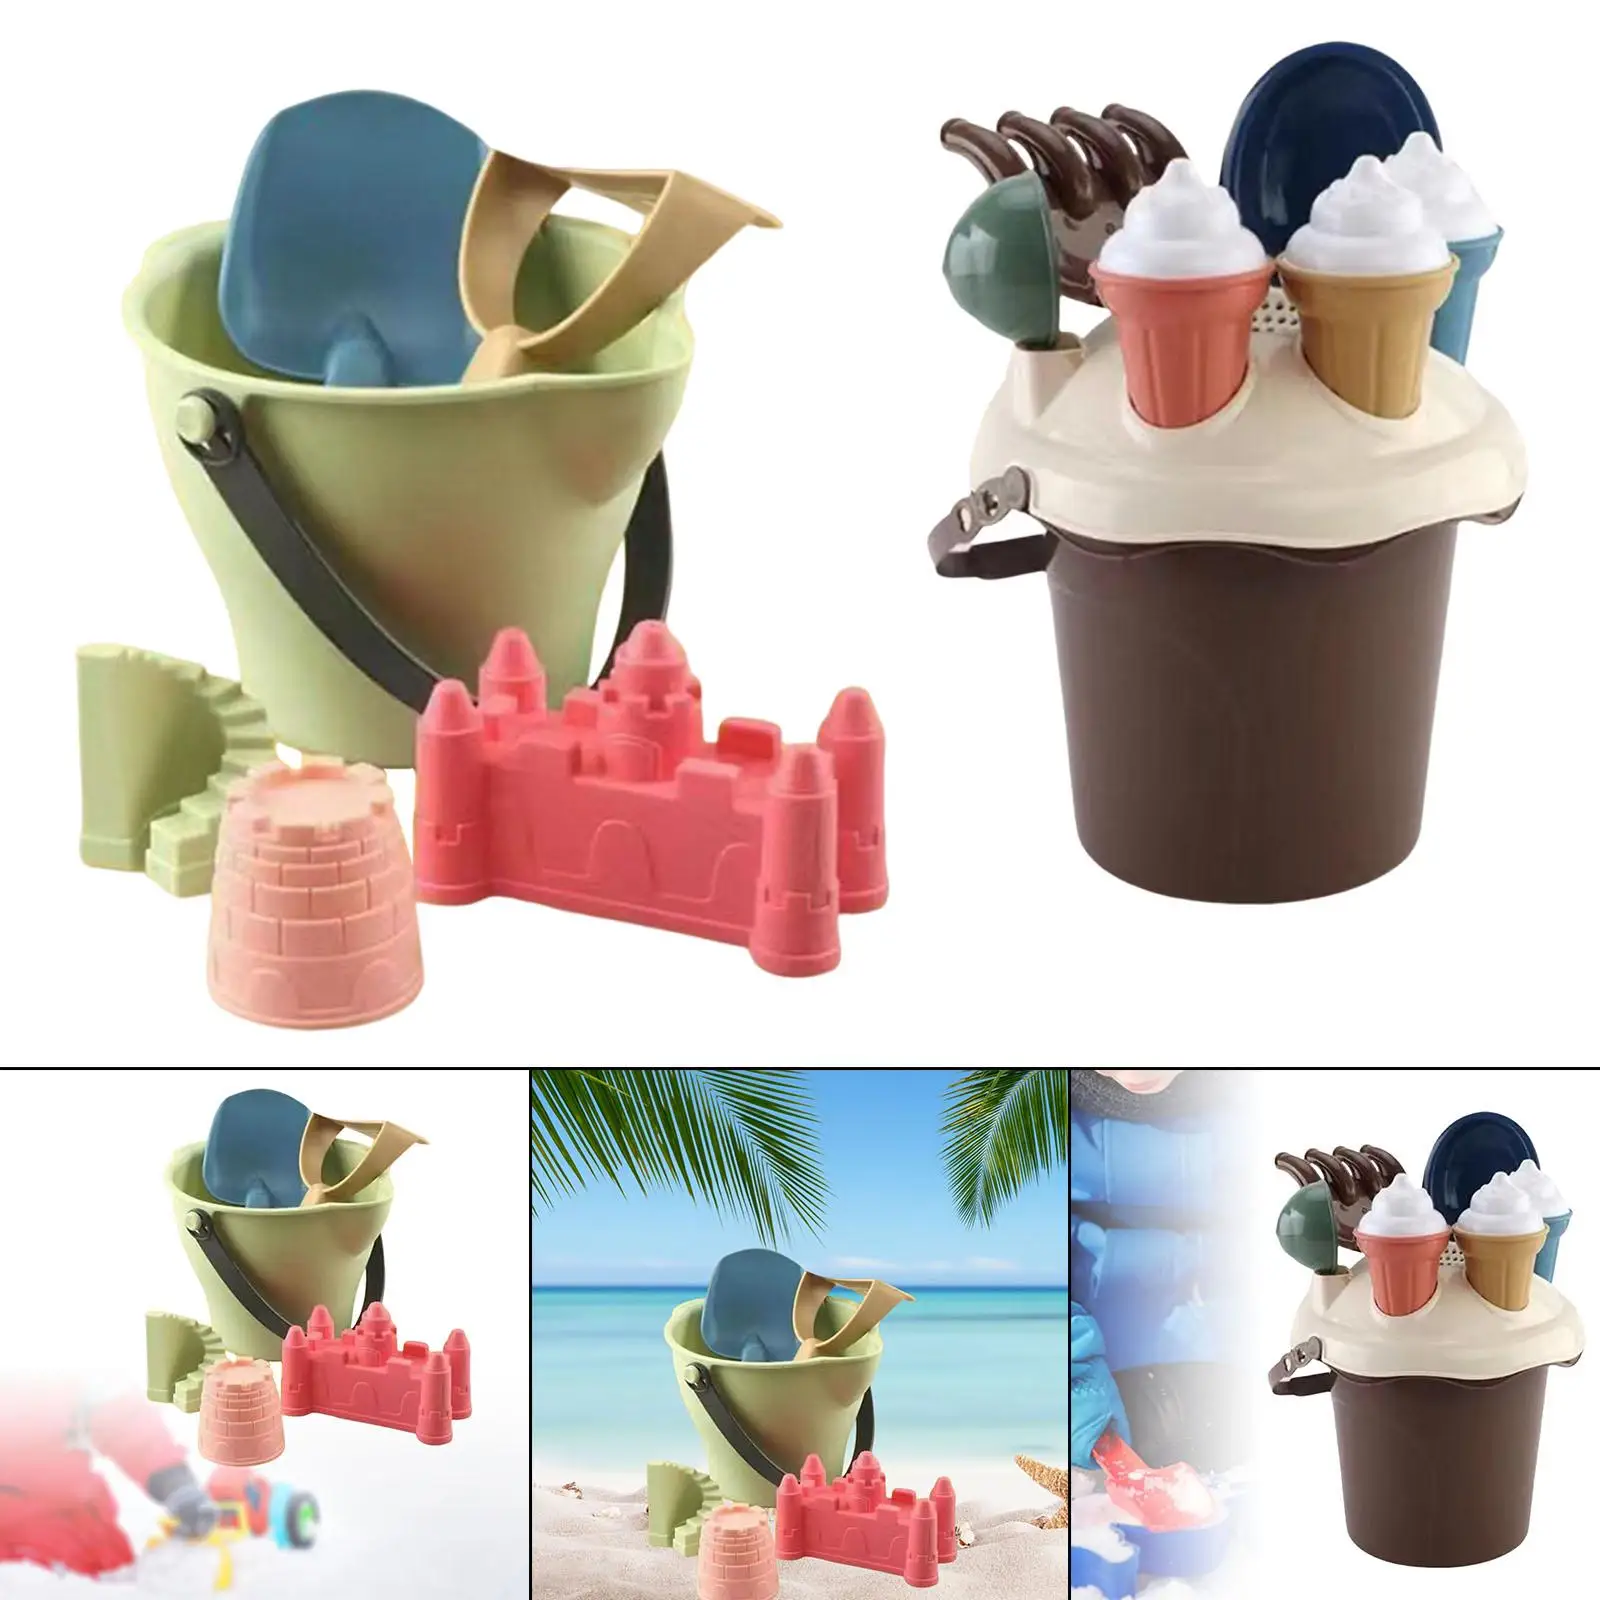 Travel Sand Toys Castle Outdoor Indoor Play Gift,Summer Sandbox Toys Beach